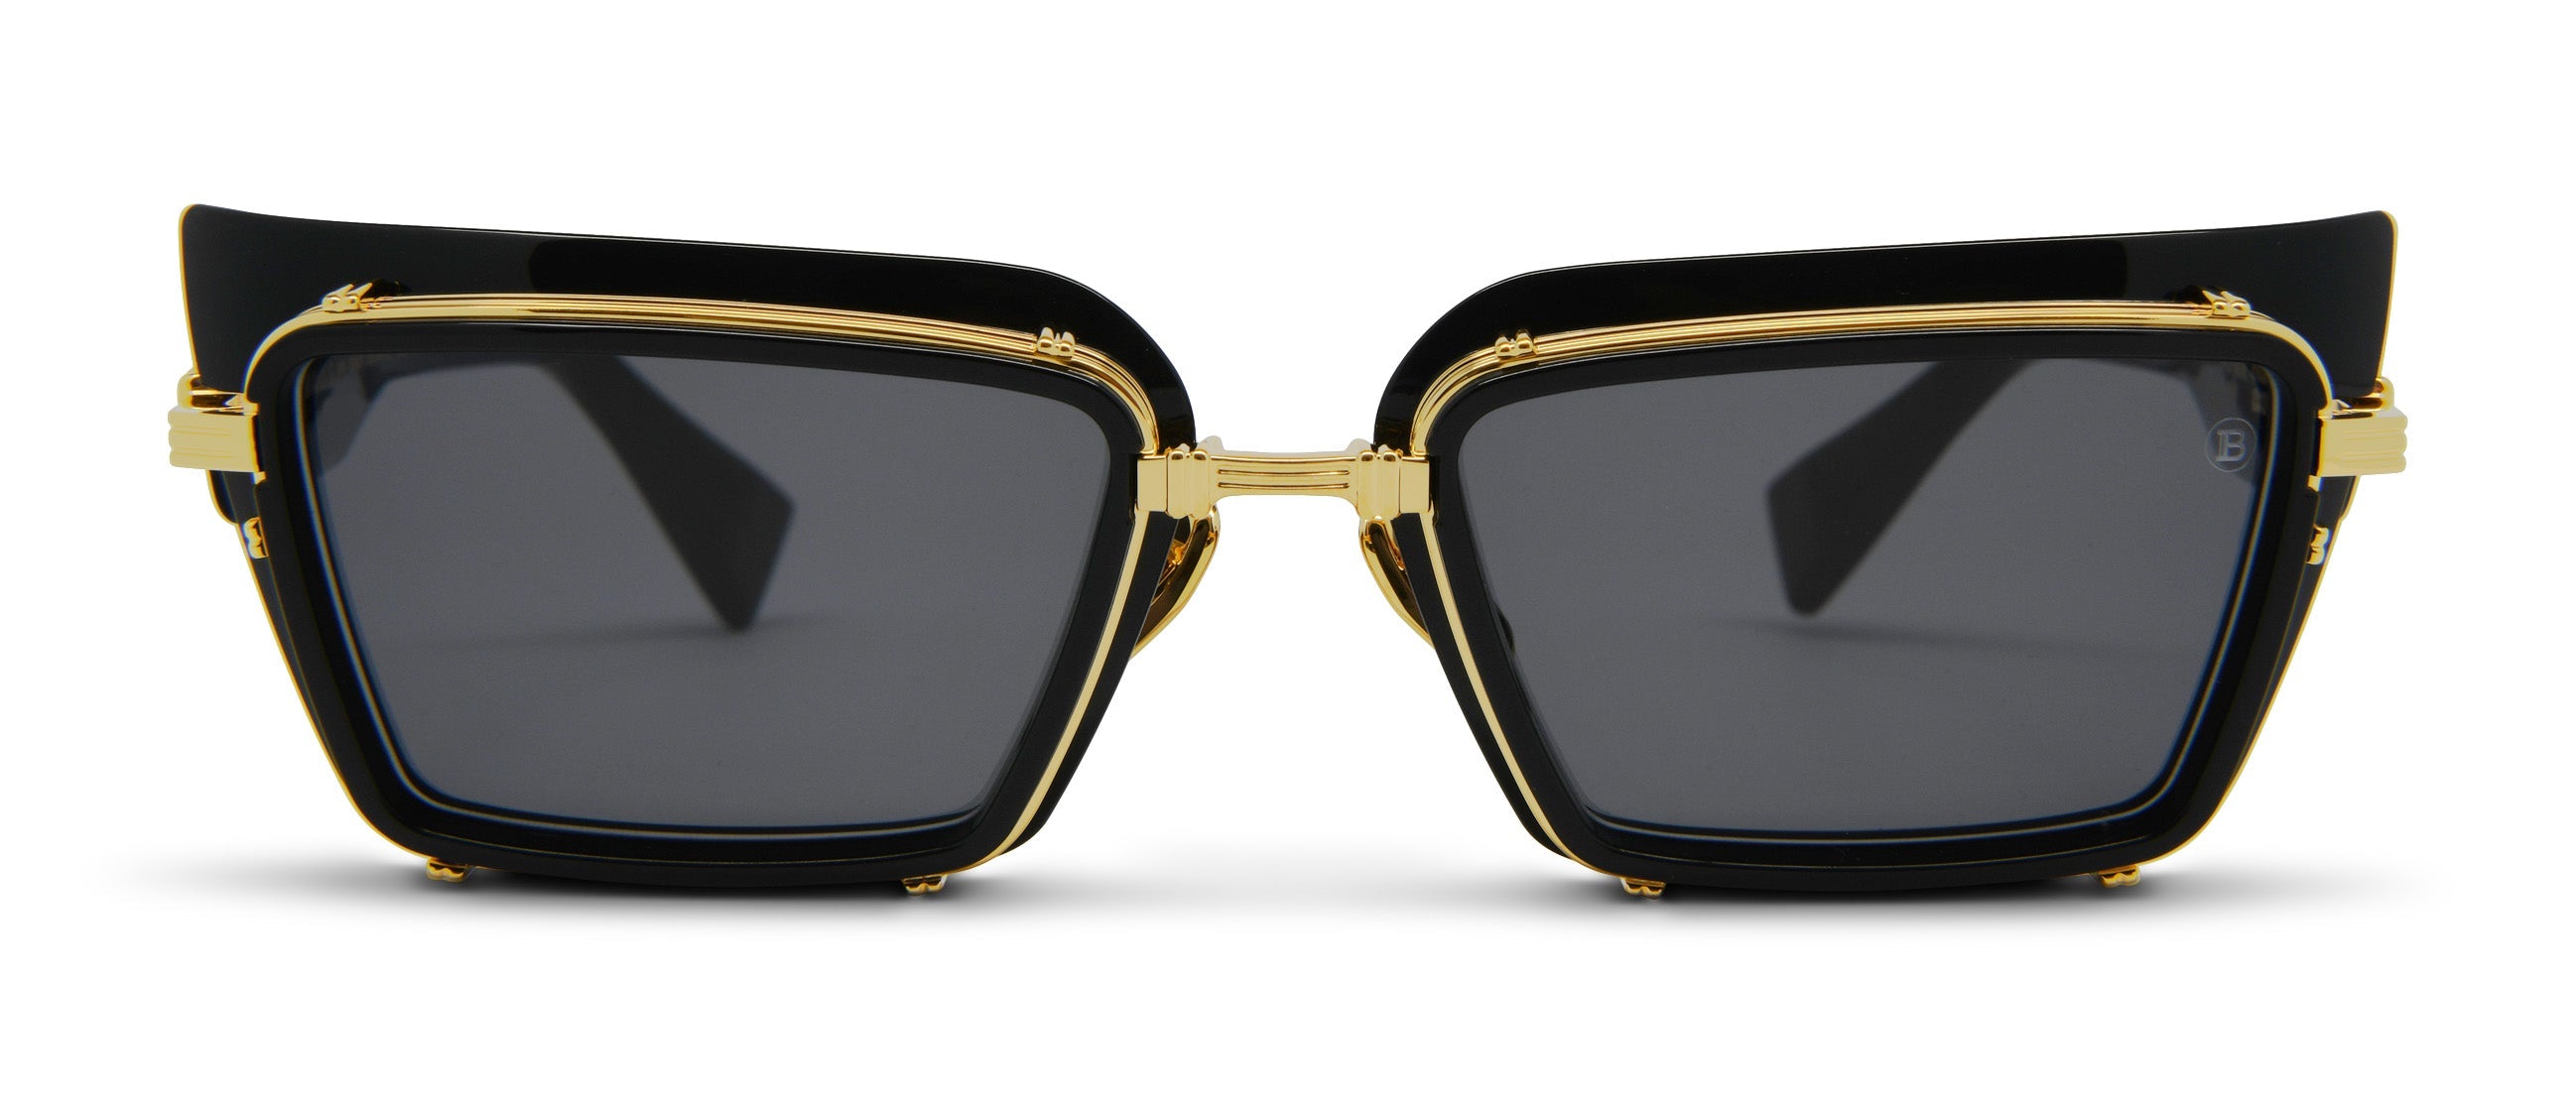 Balmain Translucent Admirable Sunglasses